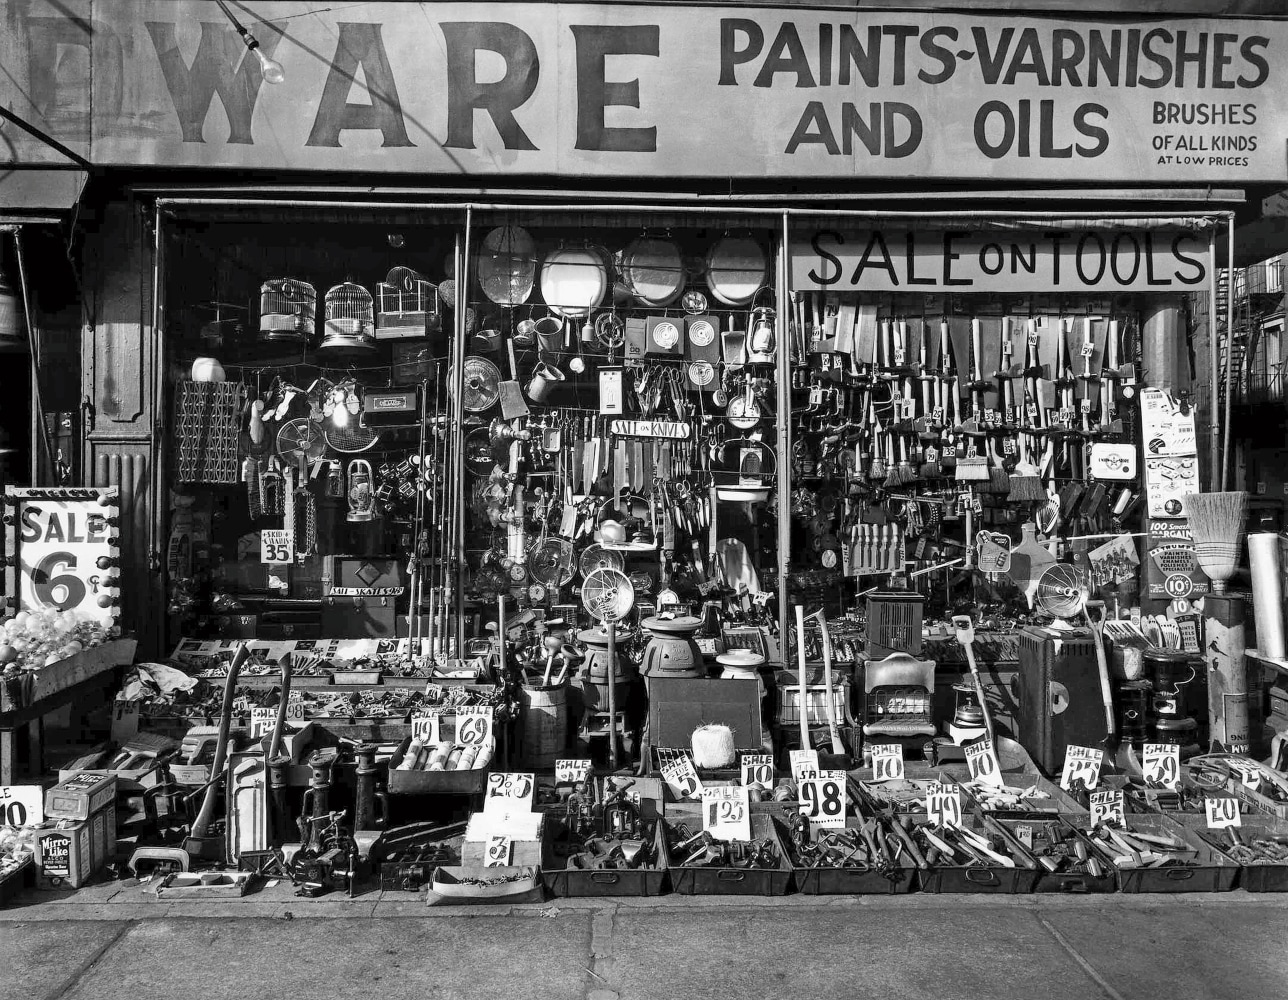 [FIG. 7]

Bernice Abbott, Hardware Store, 316-318 Bowery, Manhattan, January 26, 1938

Photo by Bernice Abbott / Getty Images.